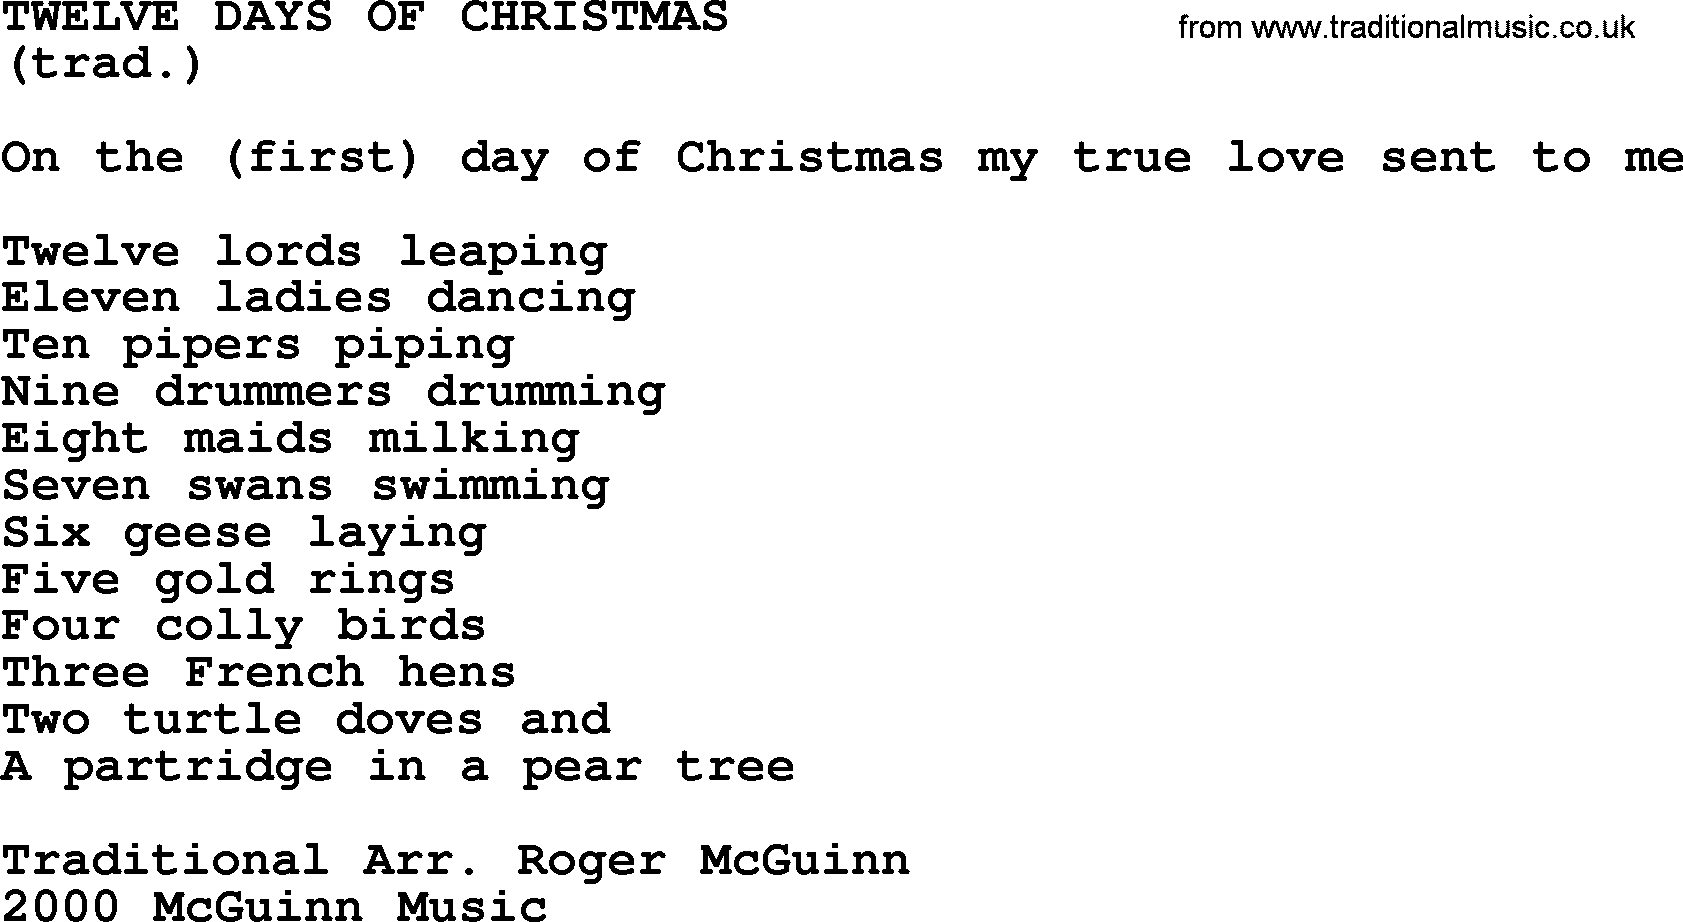 Twelve Days Of Christmas, by The Byrds - lyrics with pdf